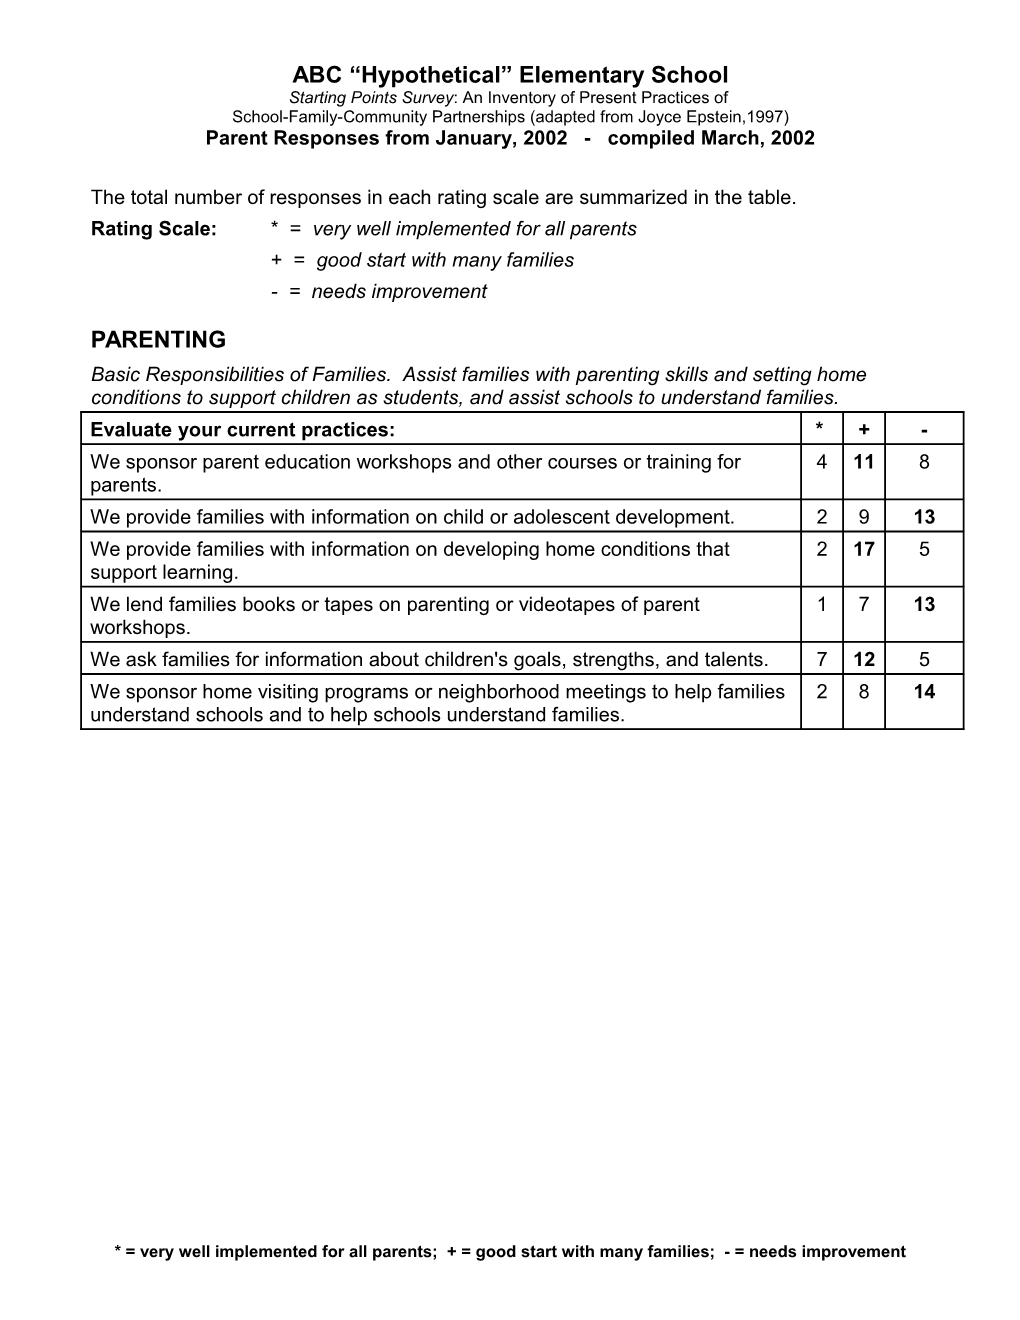 Starting Points Survey Summary (Example)